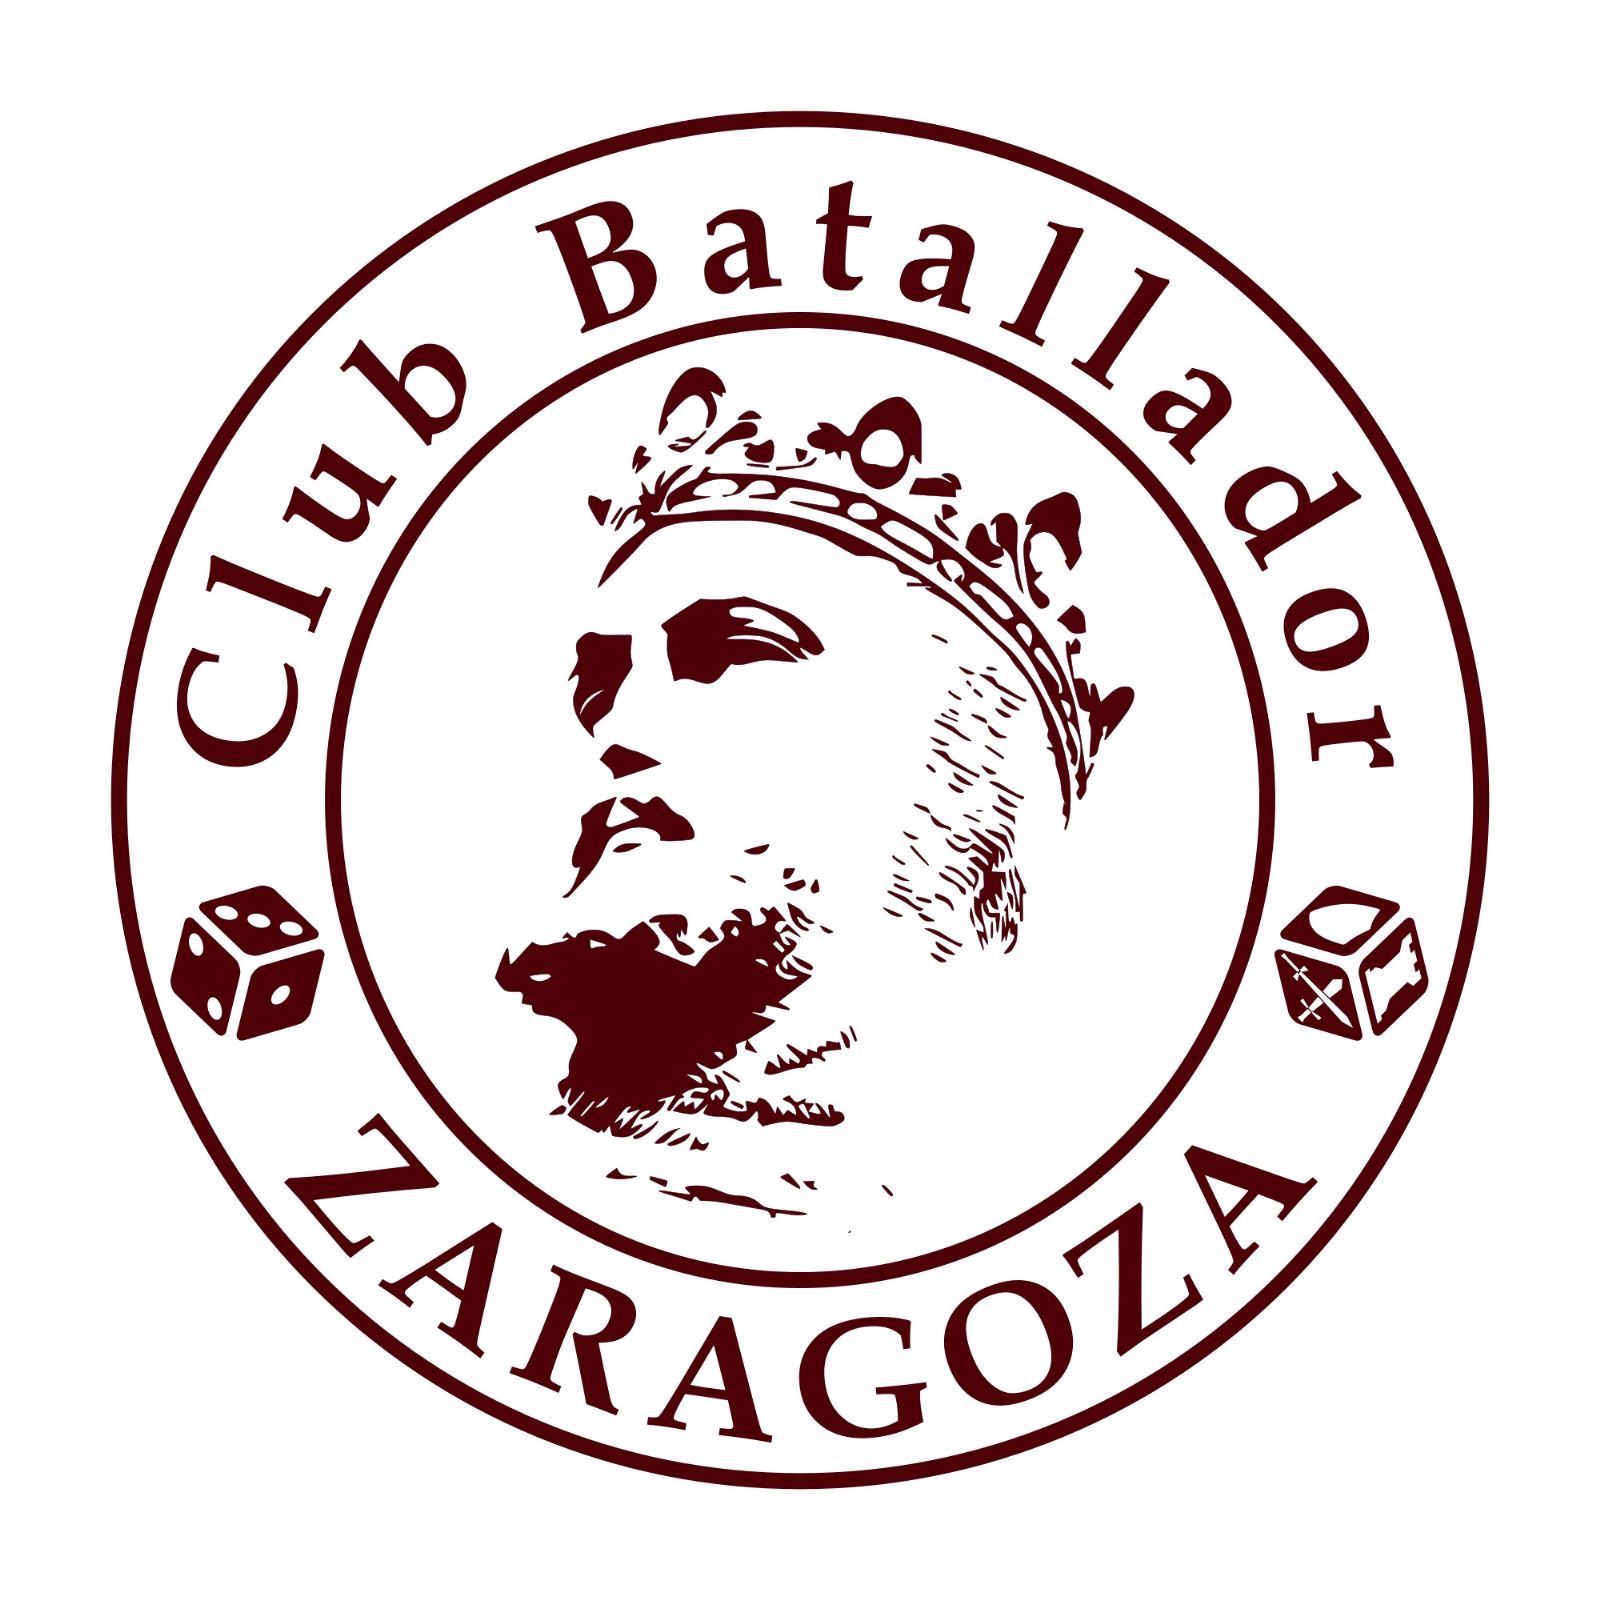 Club Batallador